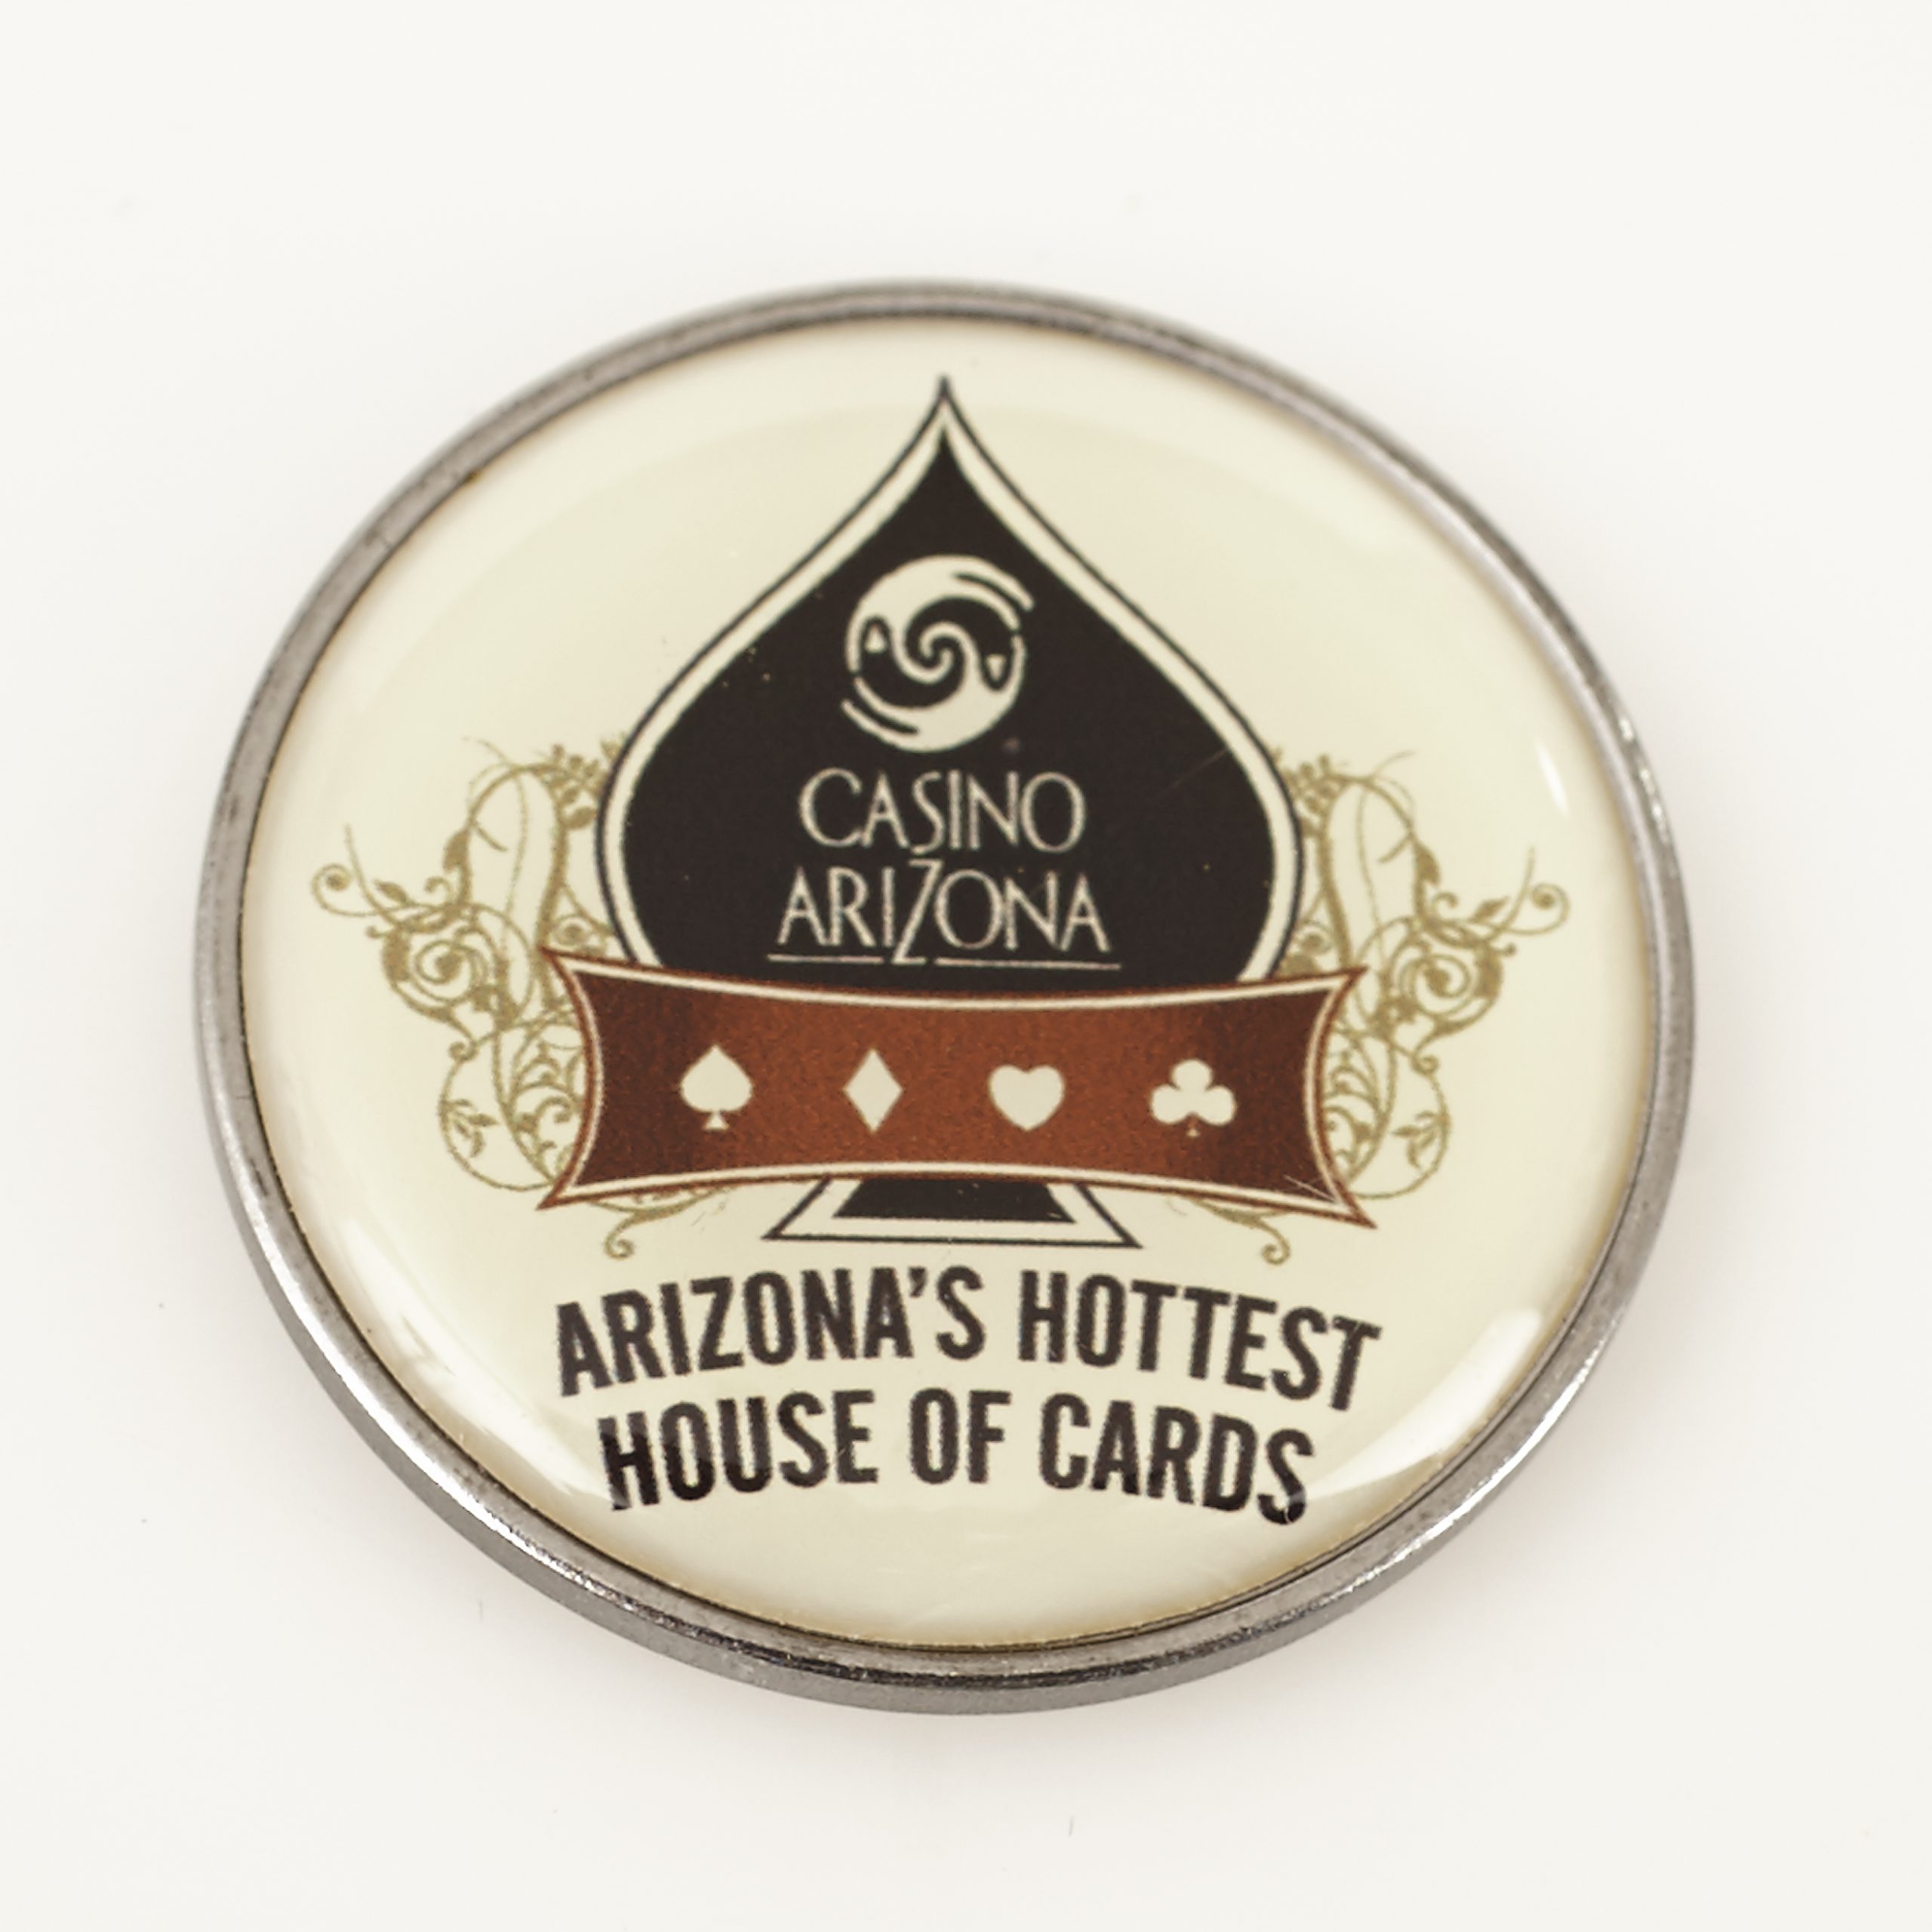 CASINO ARIZONA, ARIZONA’S HOTTEST HOUSE OF CARDS, Poker Card Guard